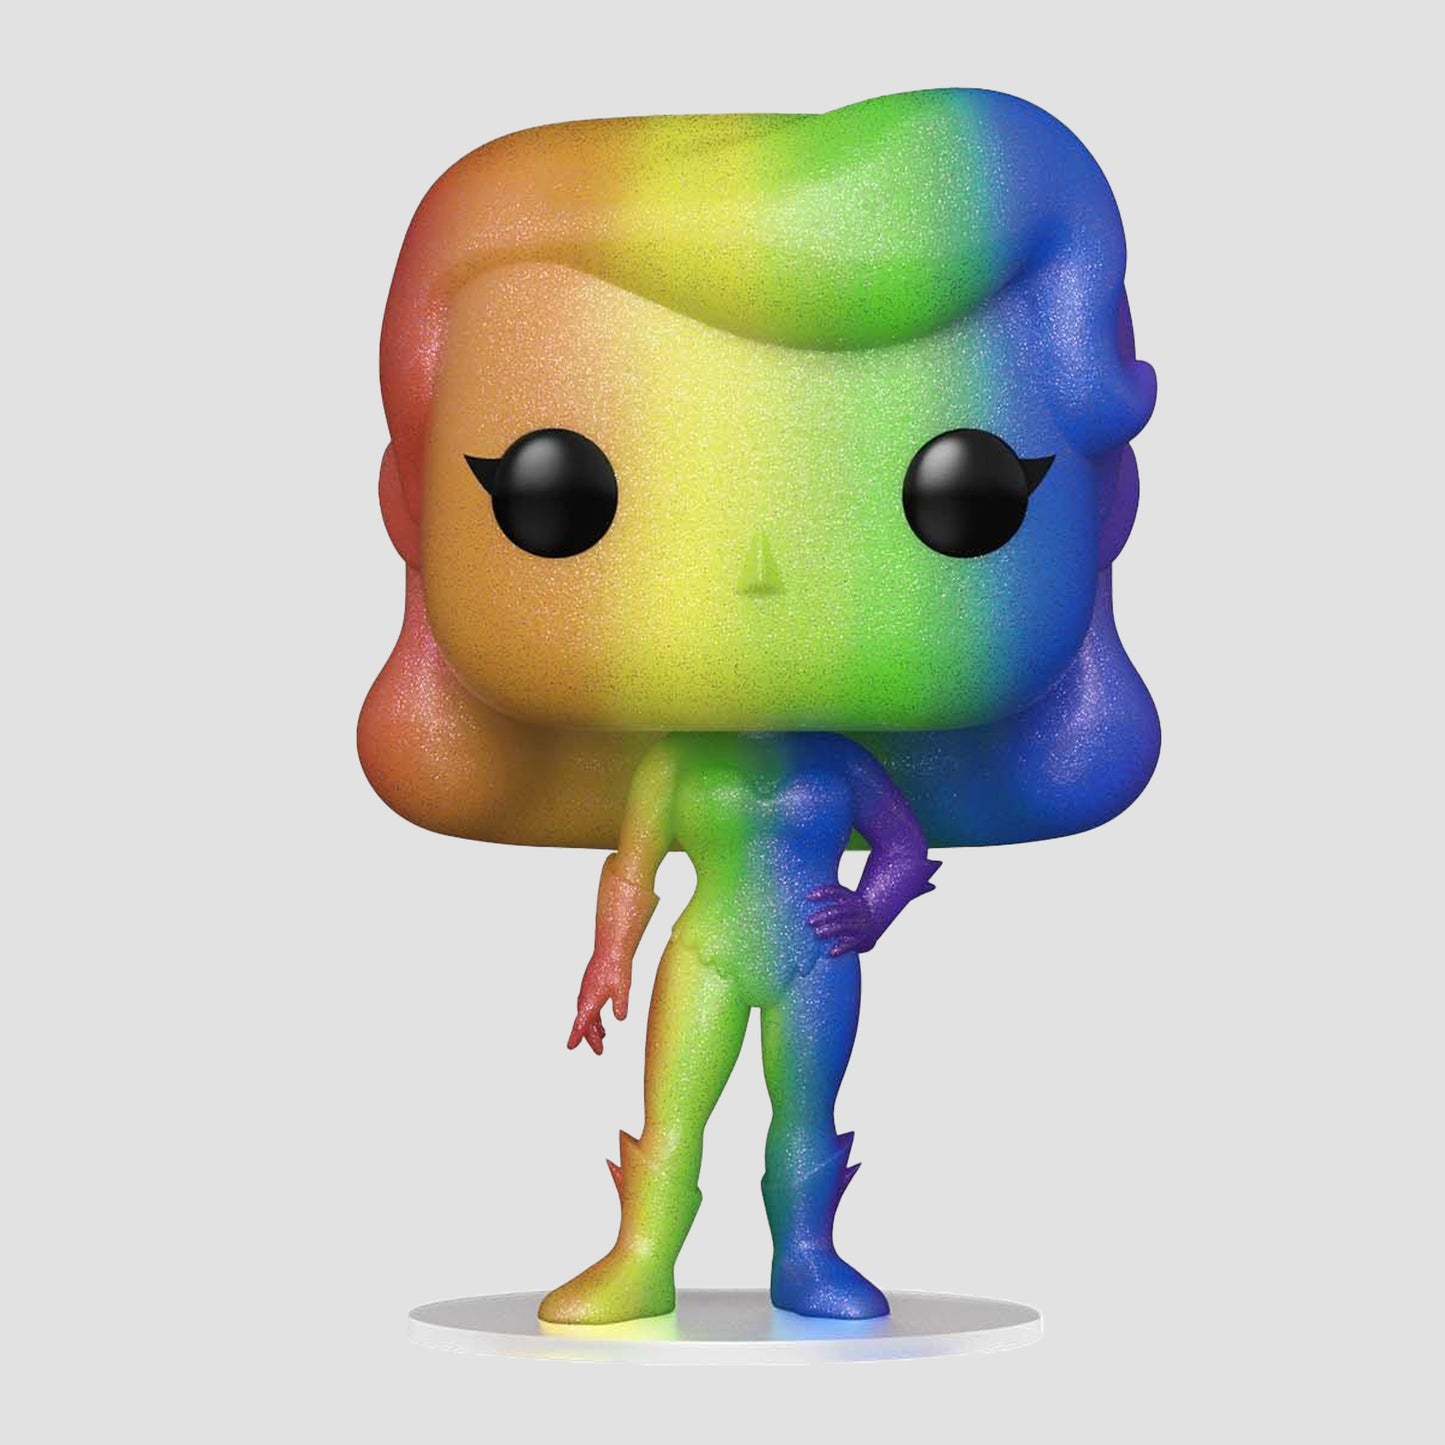 Poison Ivy Funko Pop Rainbow